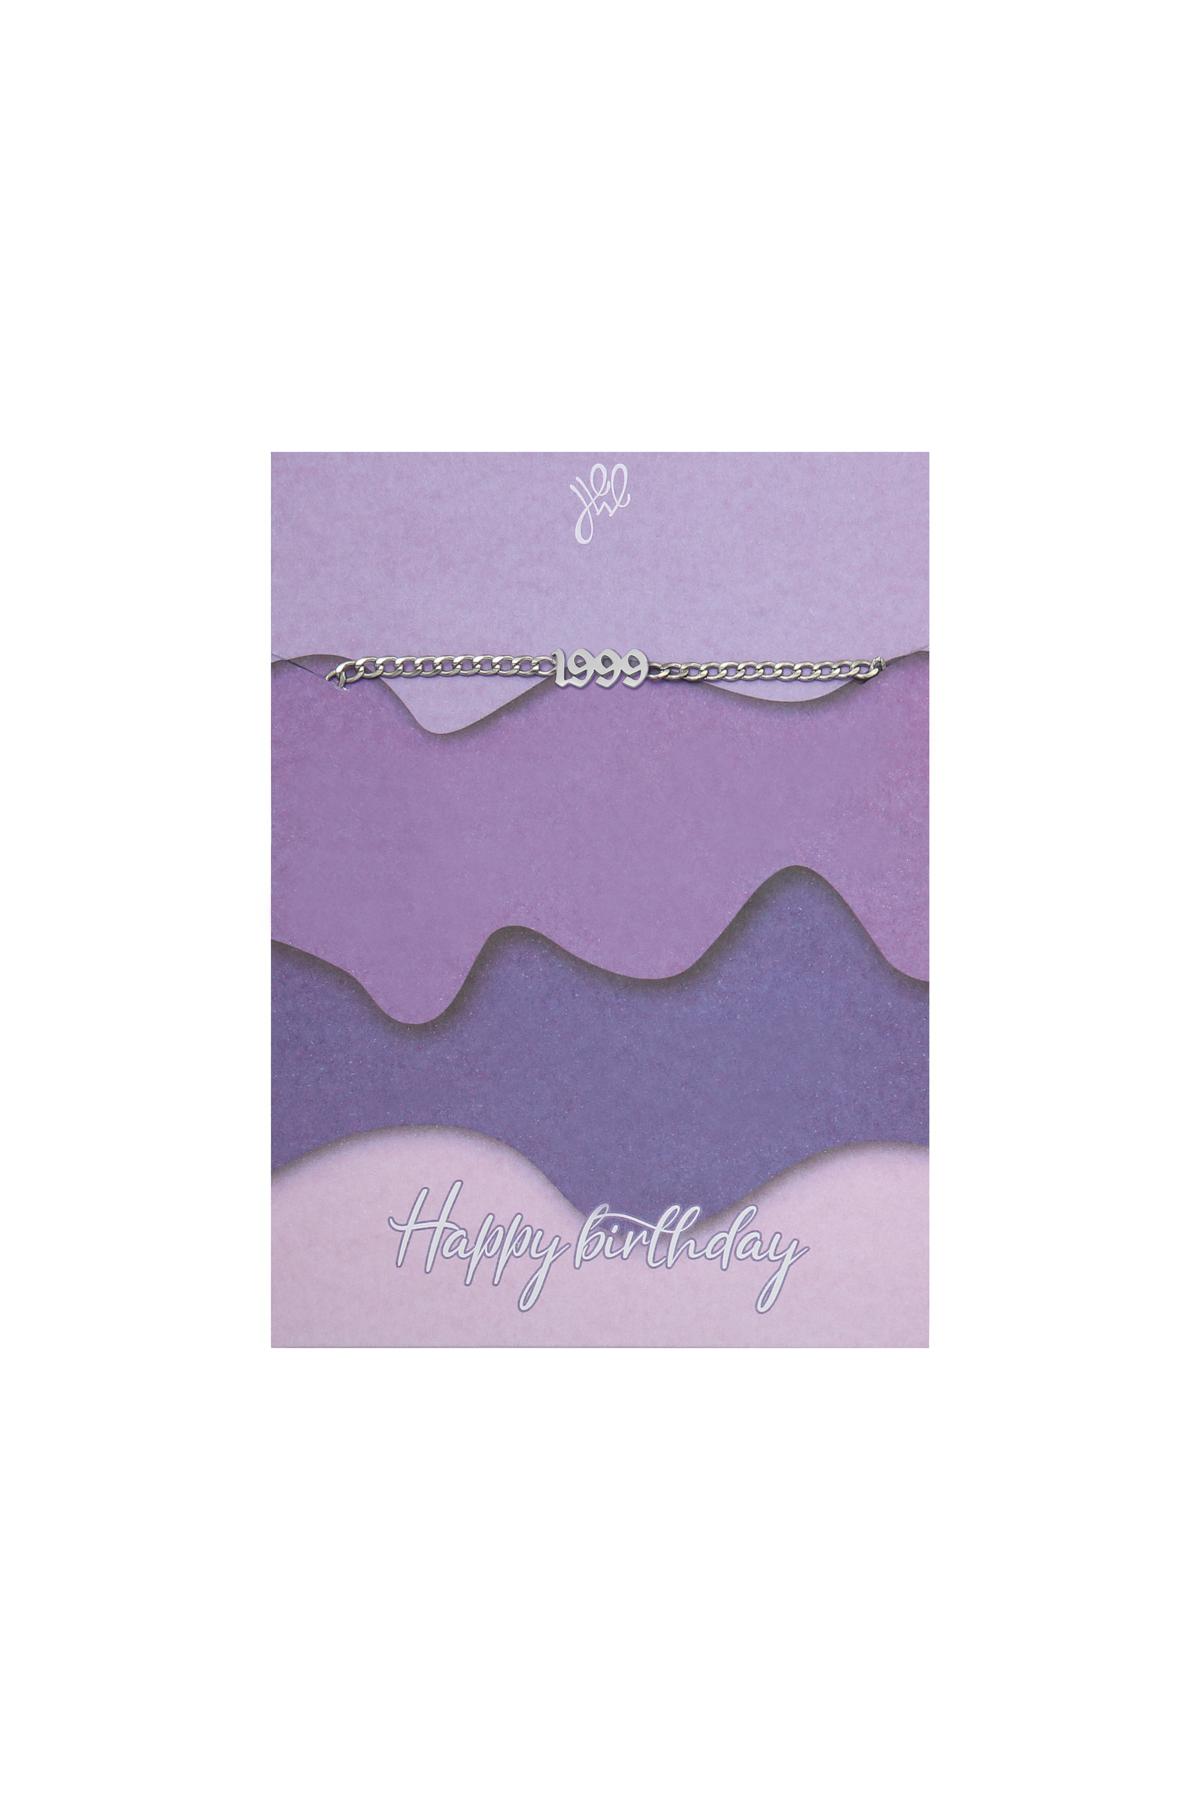 Silber / Armband Happy Birthday Years - 1999 Silber Edelstahl Bild8